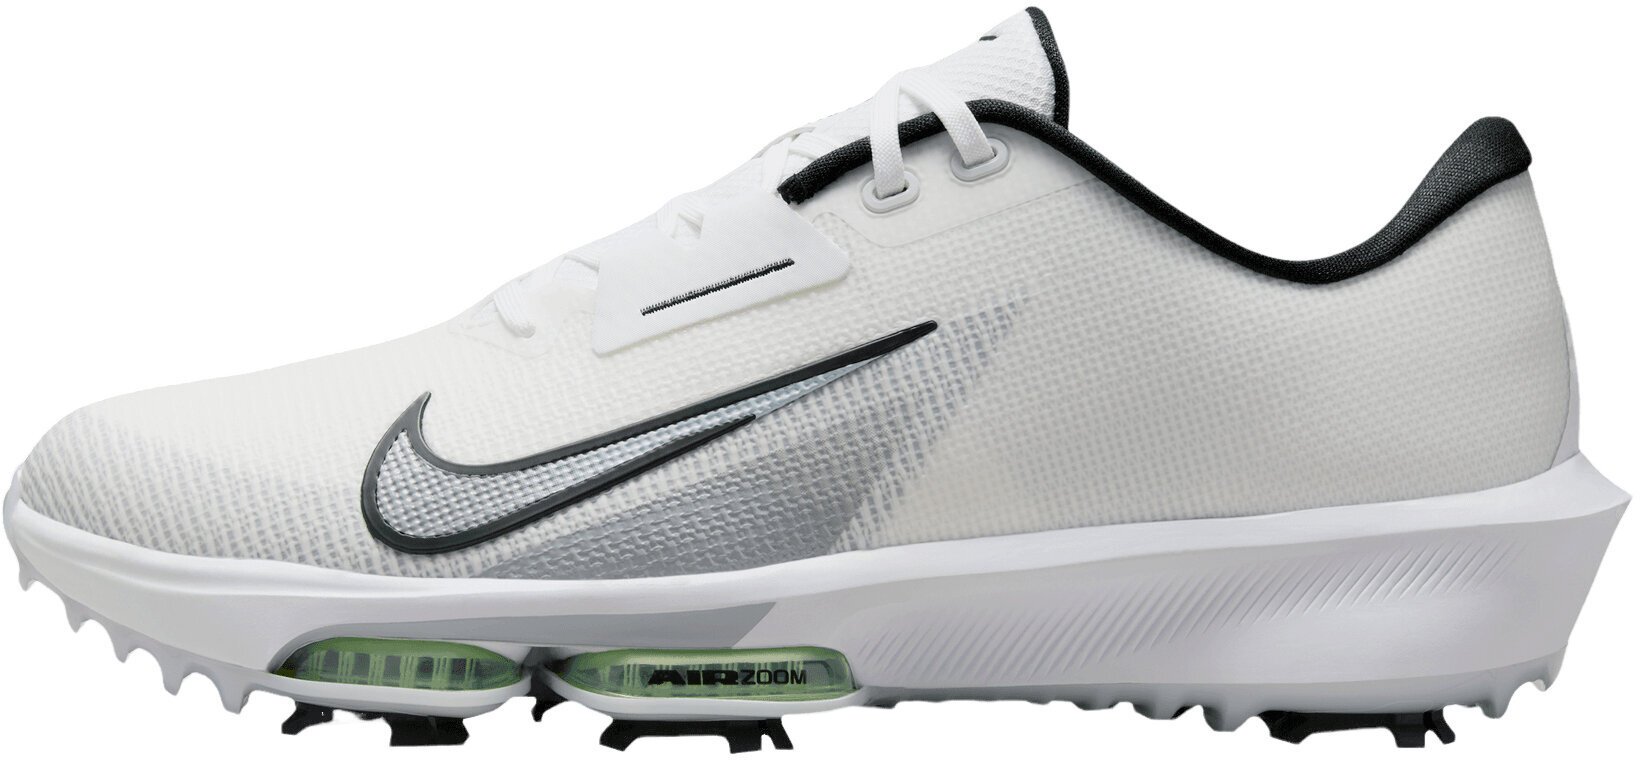 Nike Air Zoom Infinity Tour Next 2 Unisex Golf Shoes White/Black/Vapor Green/Pure Platinum 45 White unisex